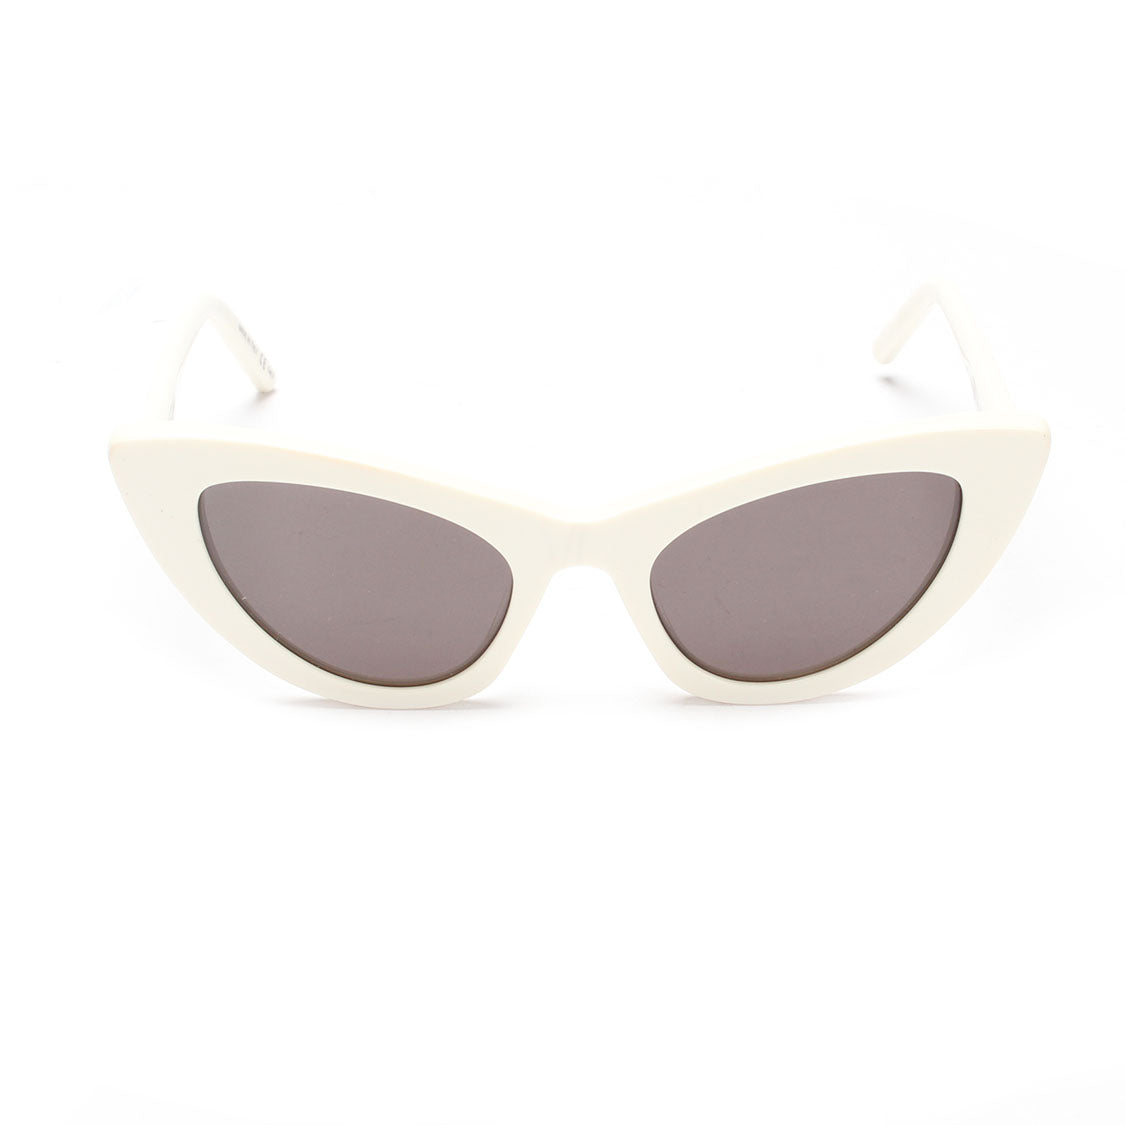 Tinted Cat Eye Sunglasses